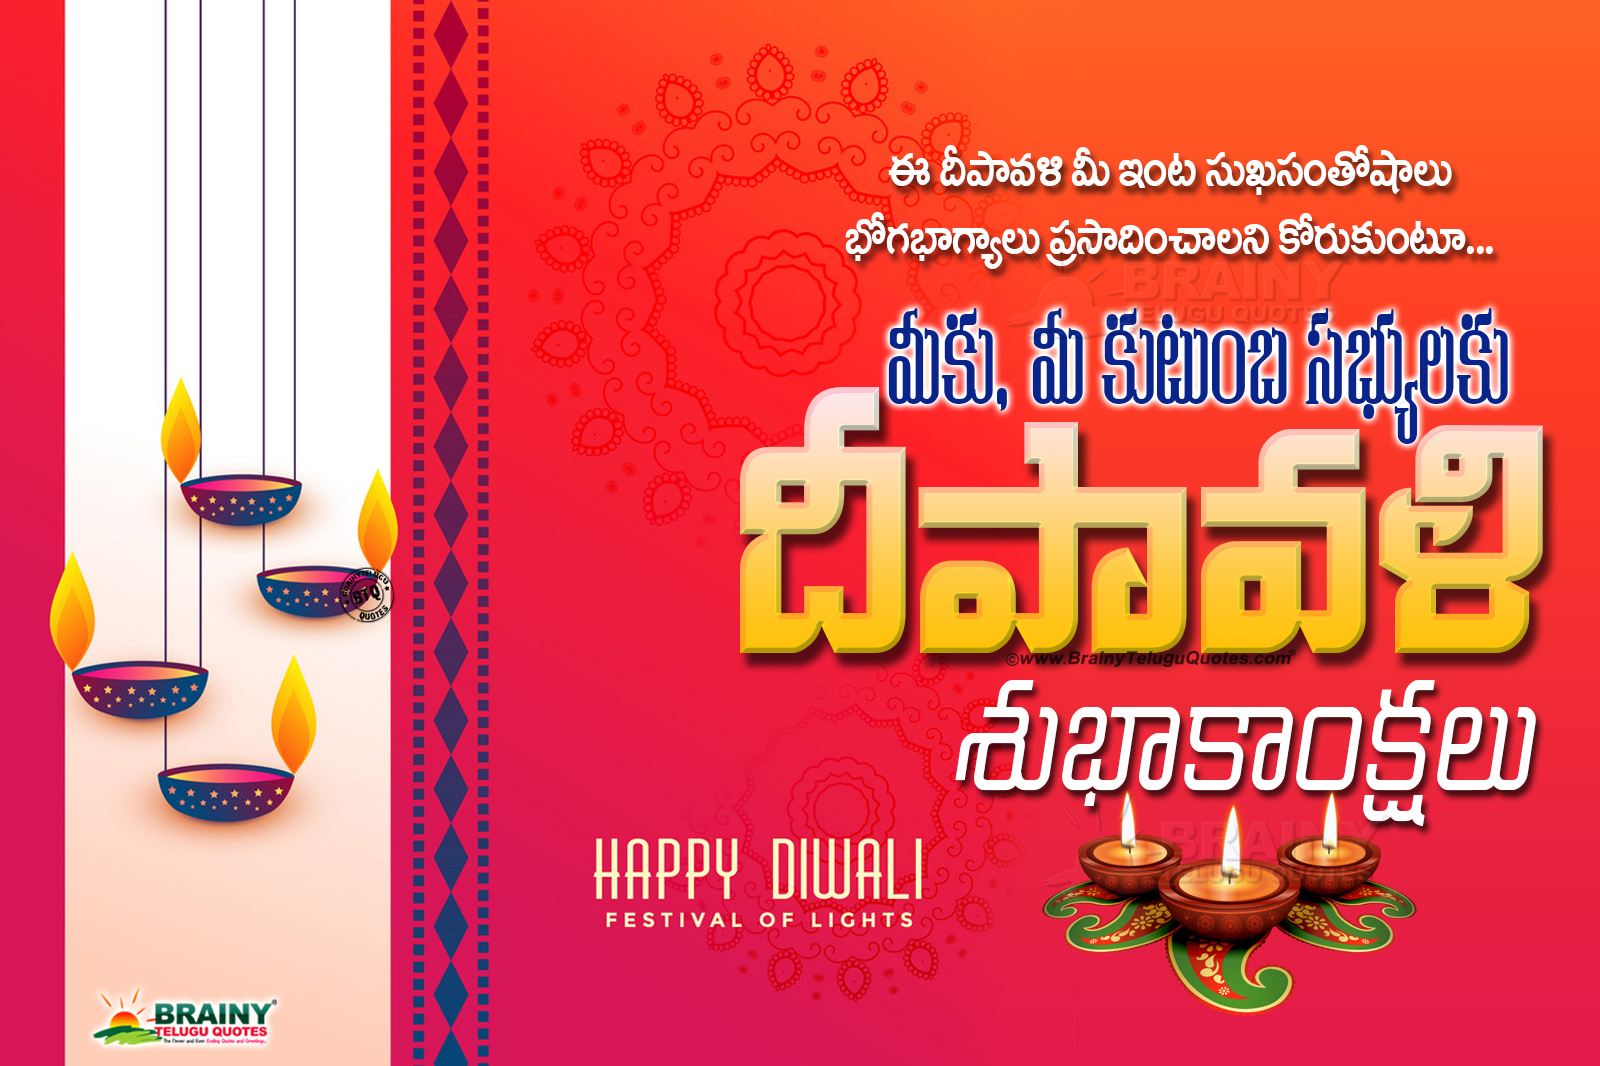 Happy Diwali Greetings In Telugu, Telugu Diwali Wishes - Poster - 1600x1066  Wallpaper 